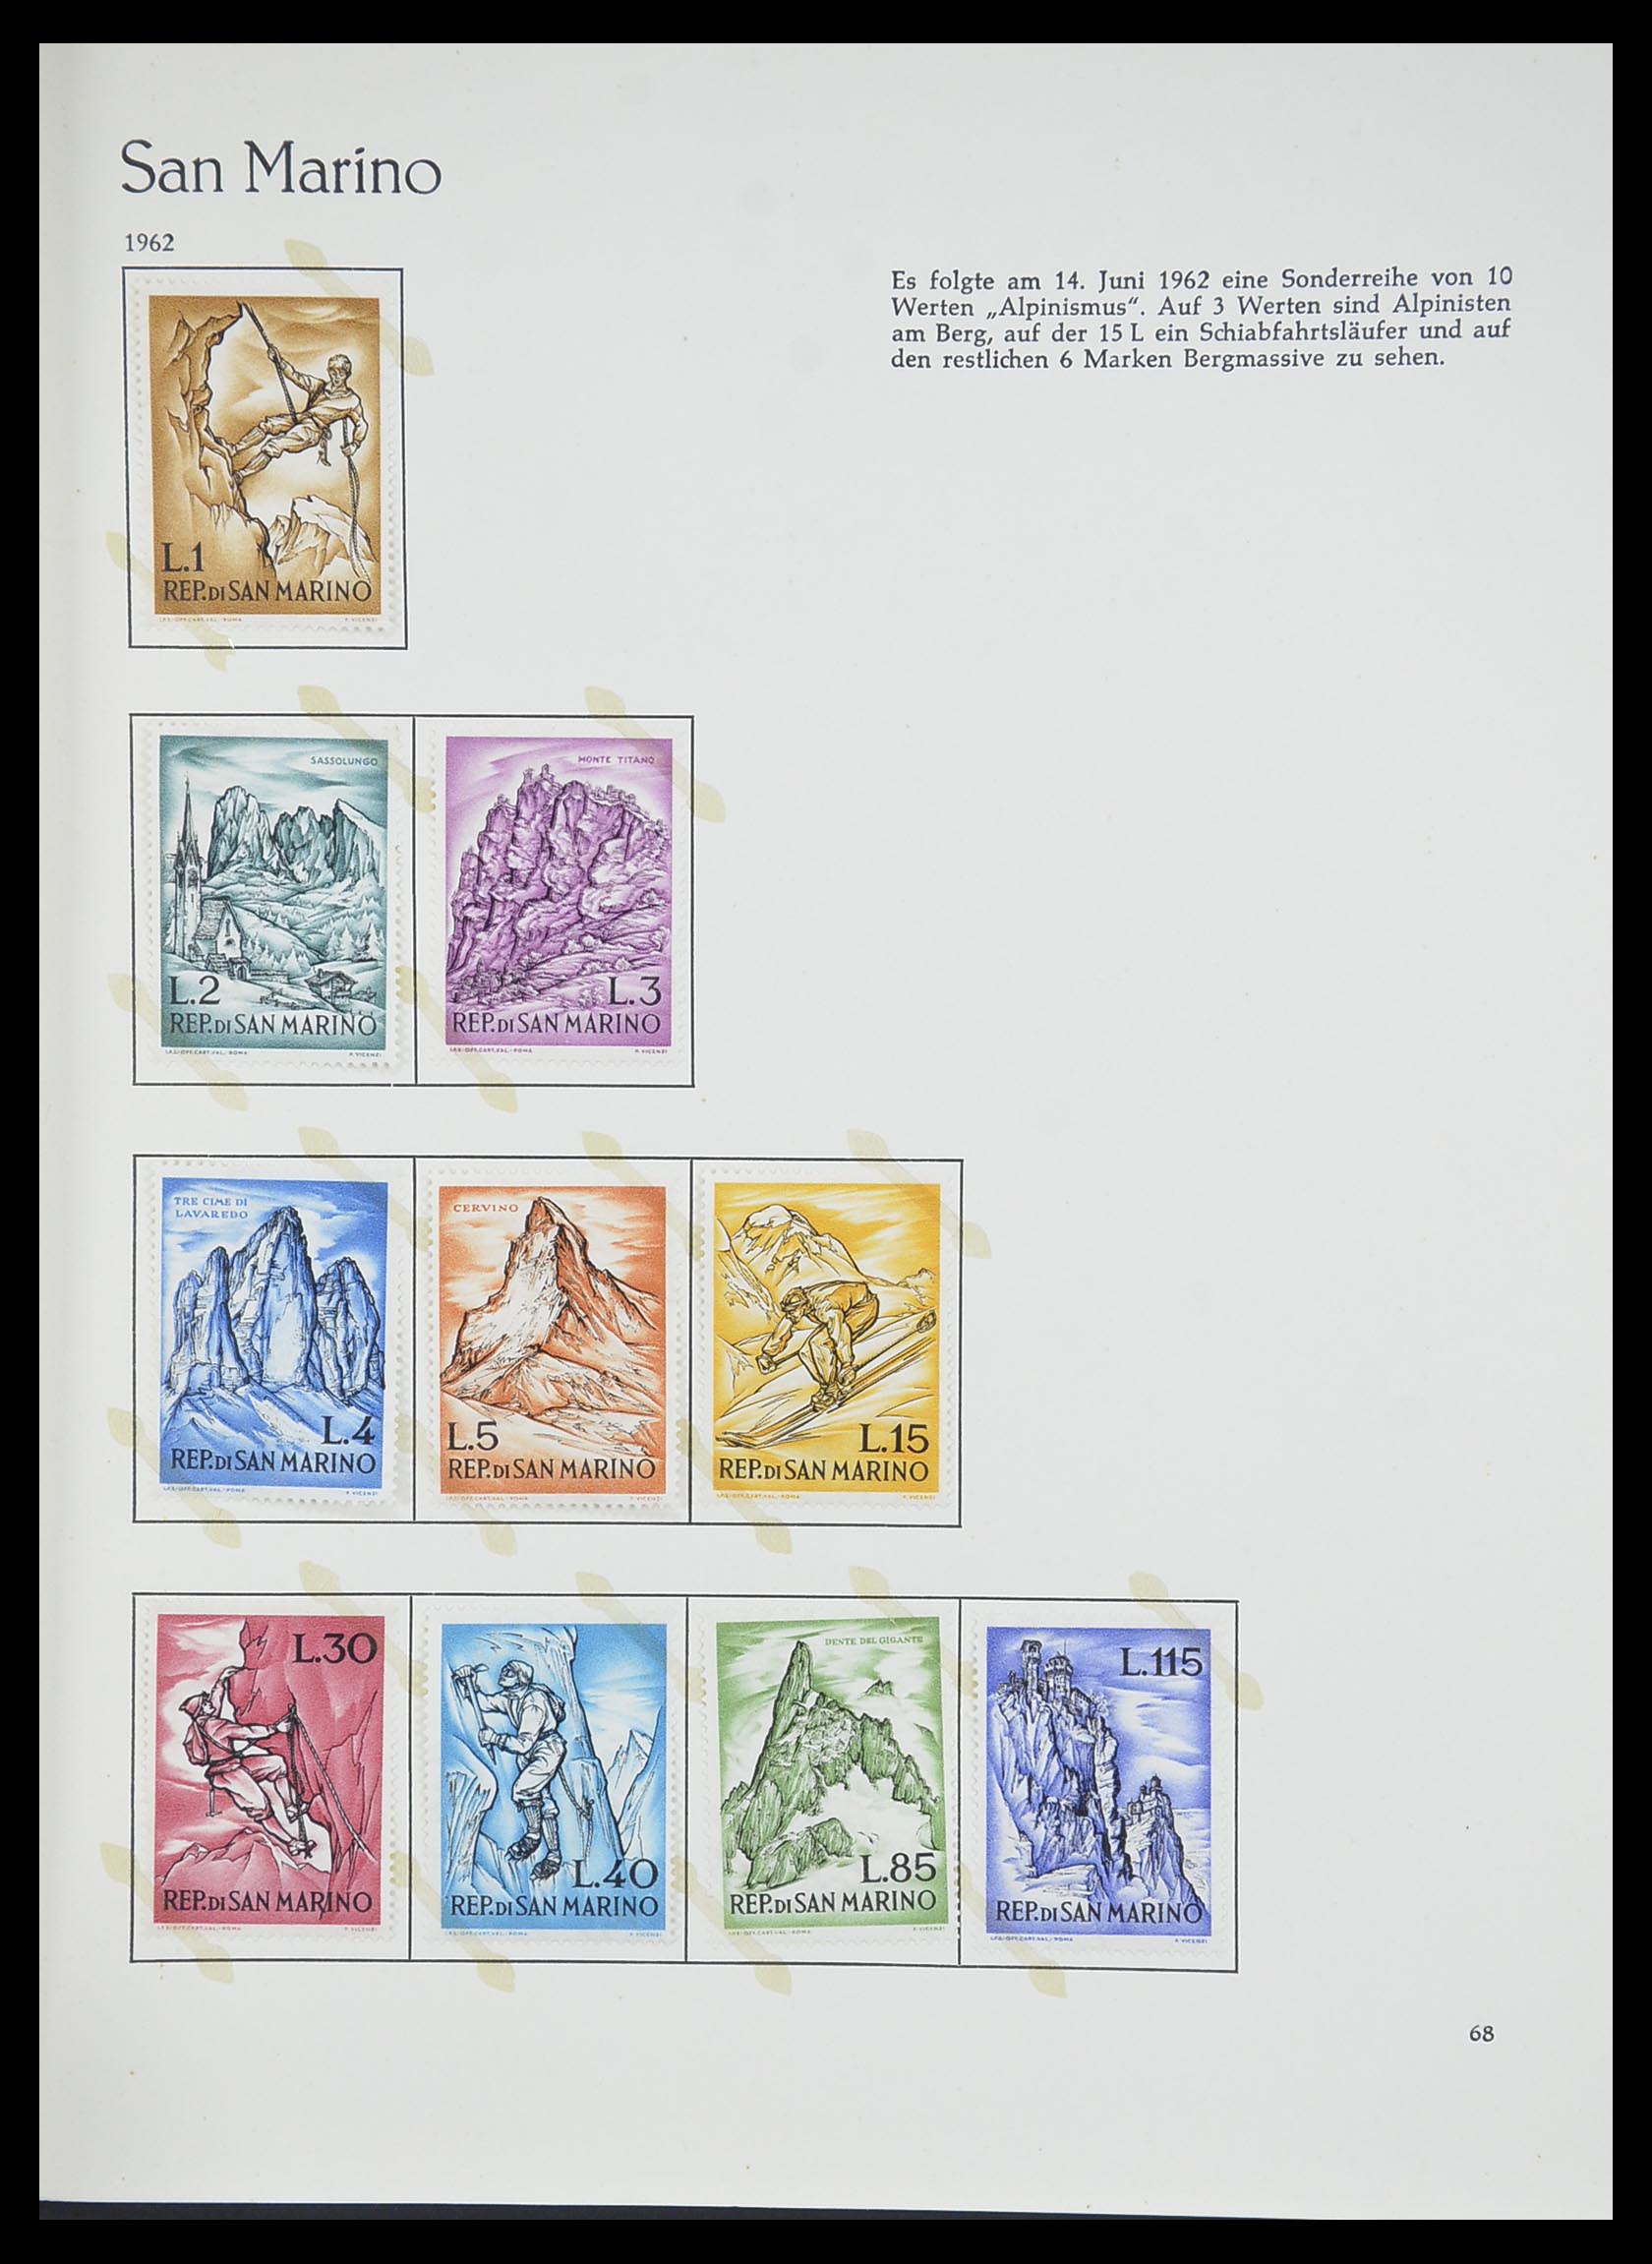 33701 068 - Stamp collection 33701 San Marino 1877-1962.